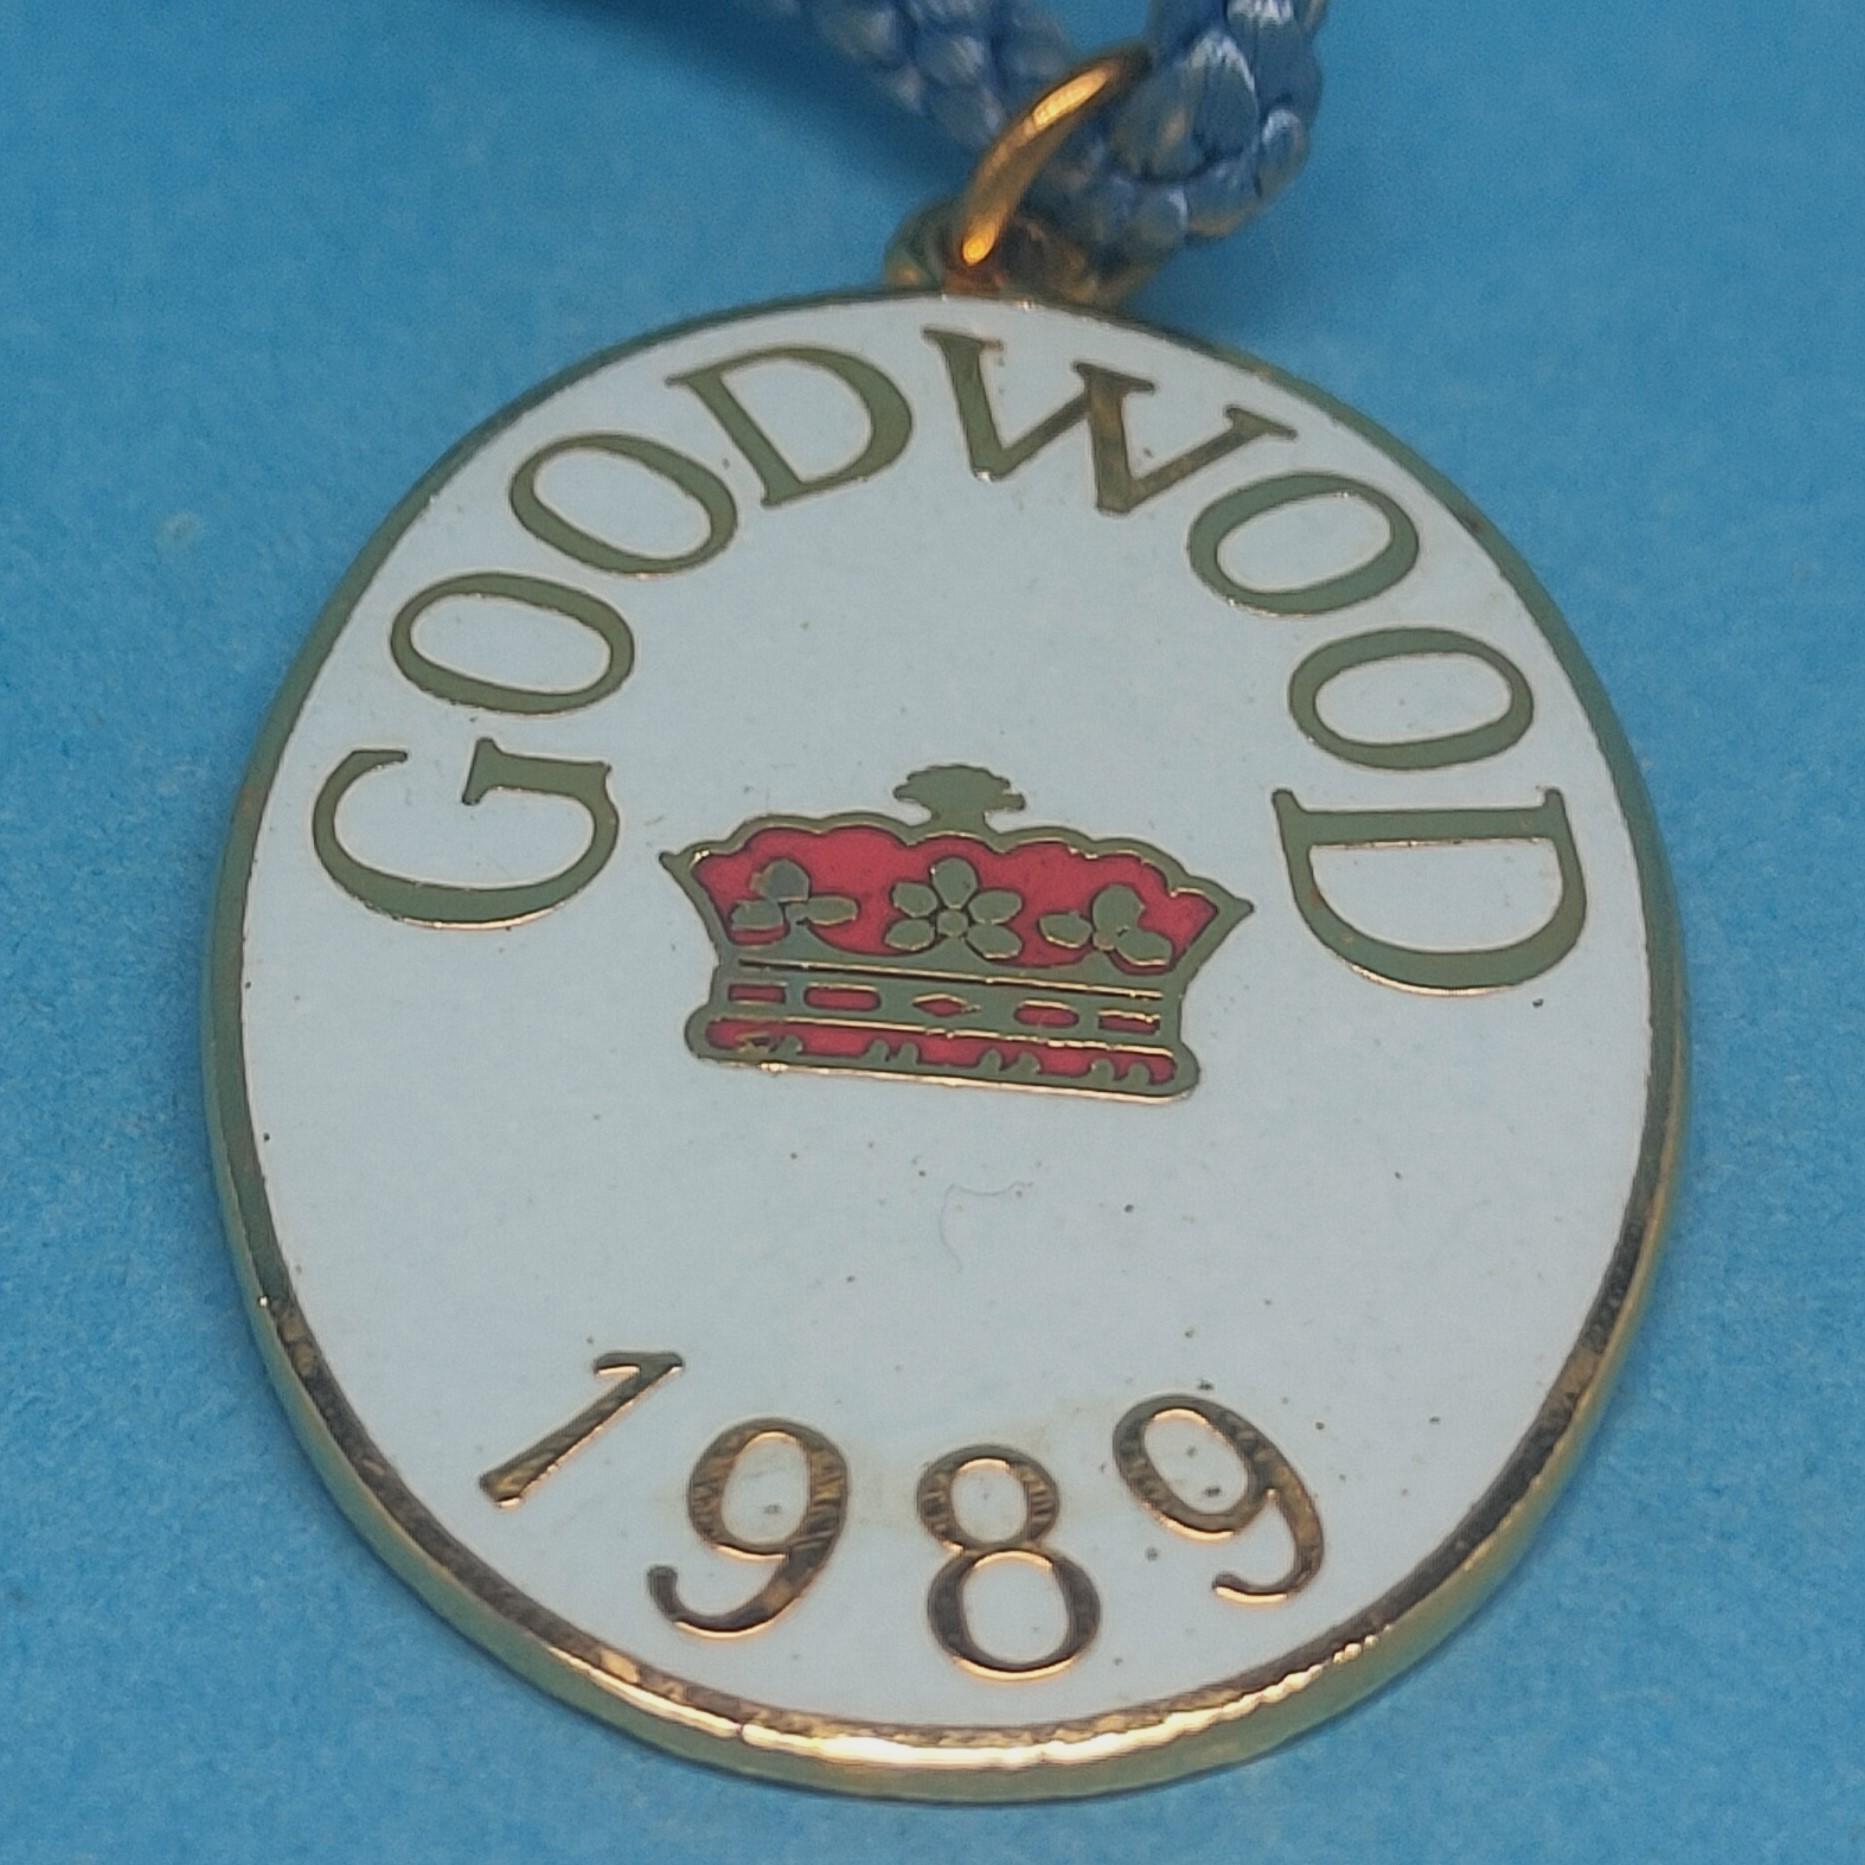 Goodwood 1989